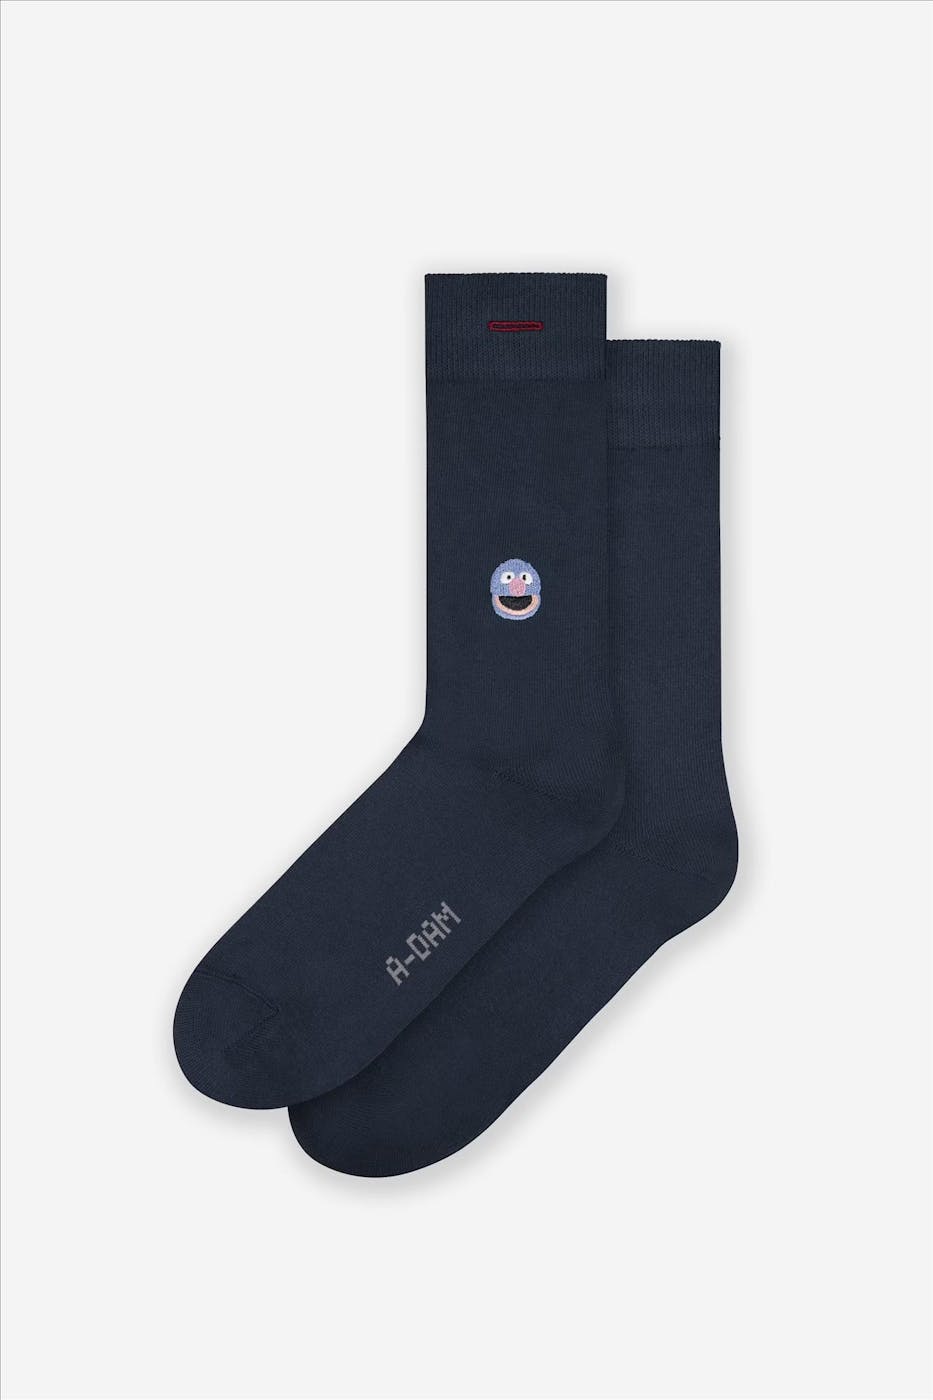 A'dam - Donkerblauwe Grover sokken, maat: 41-46